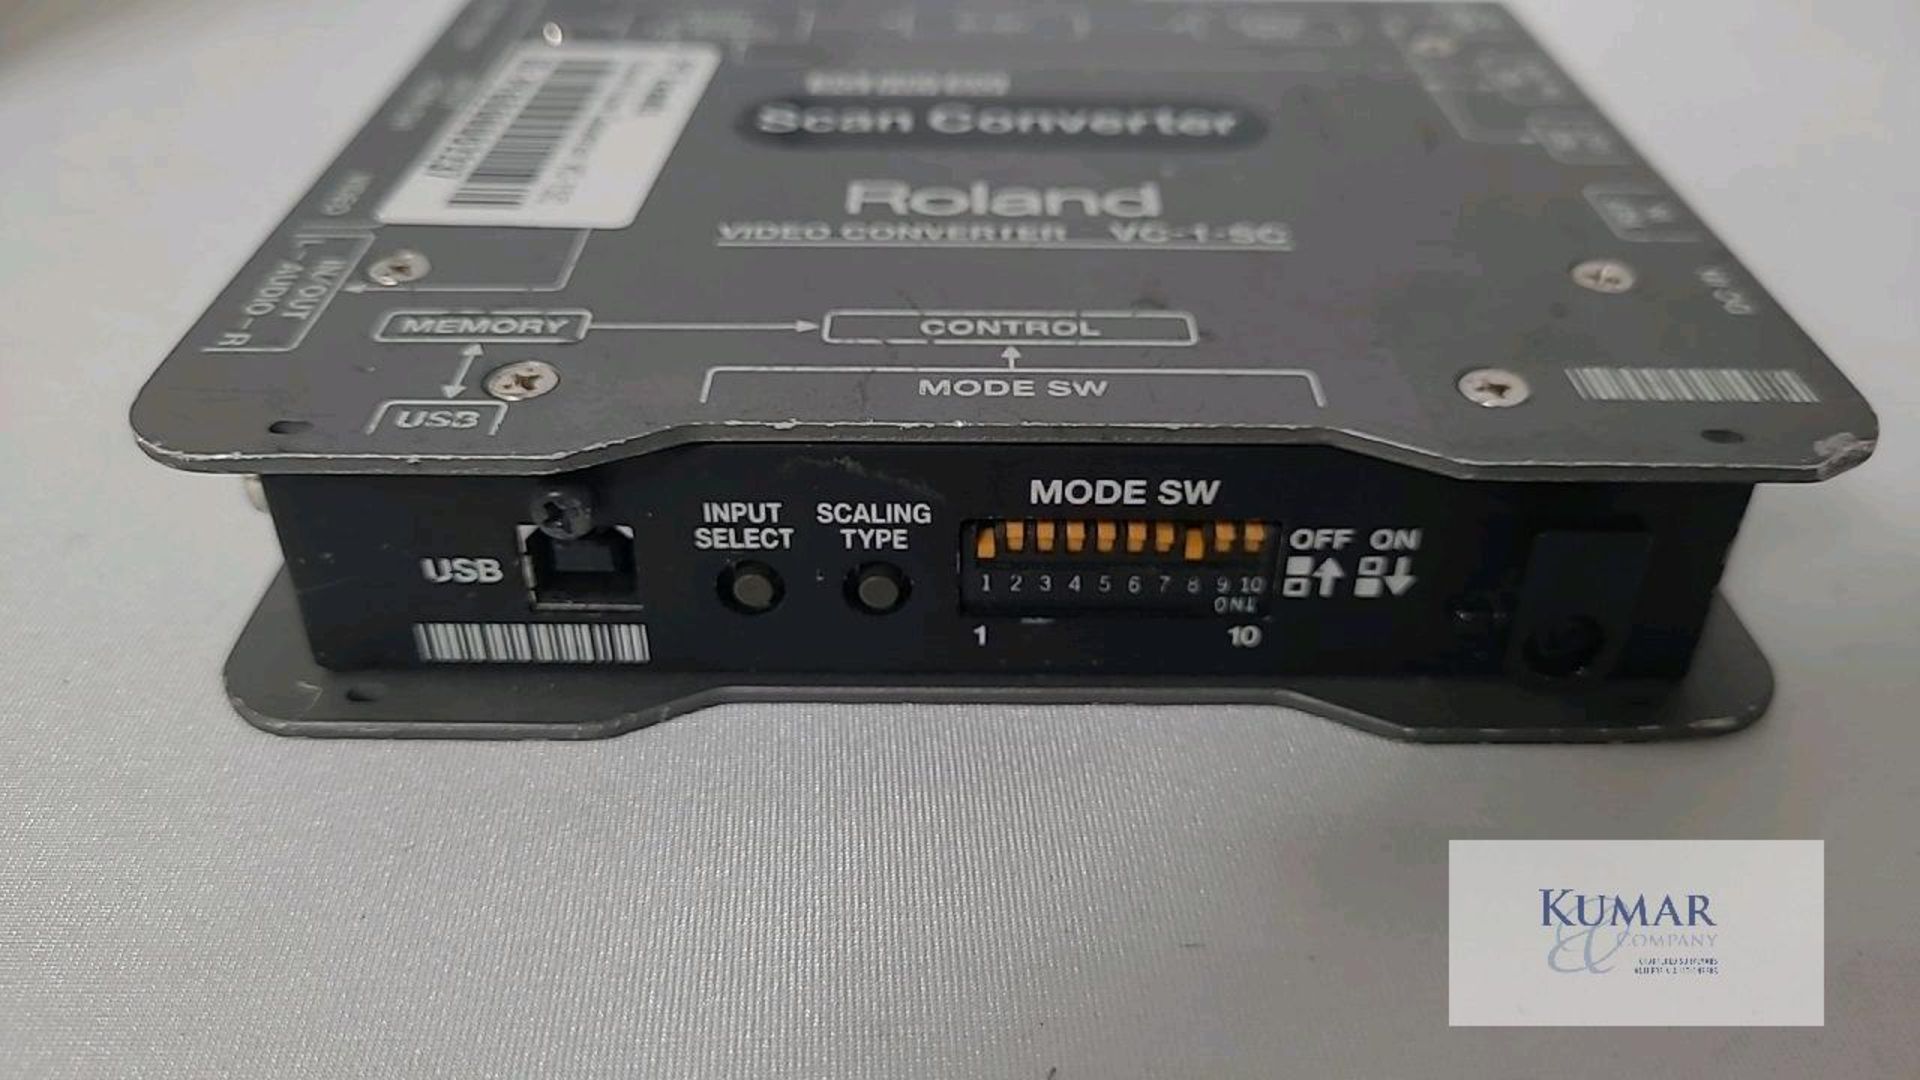 Roland Scan Convertor - SDI/HDMI bi-directional and PSU - Image 5 of 6